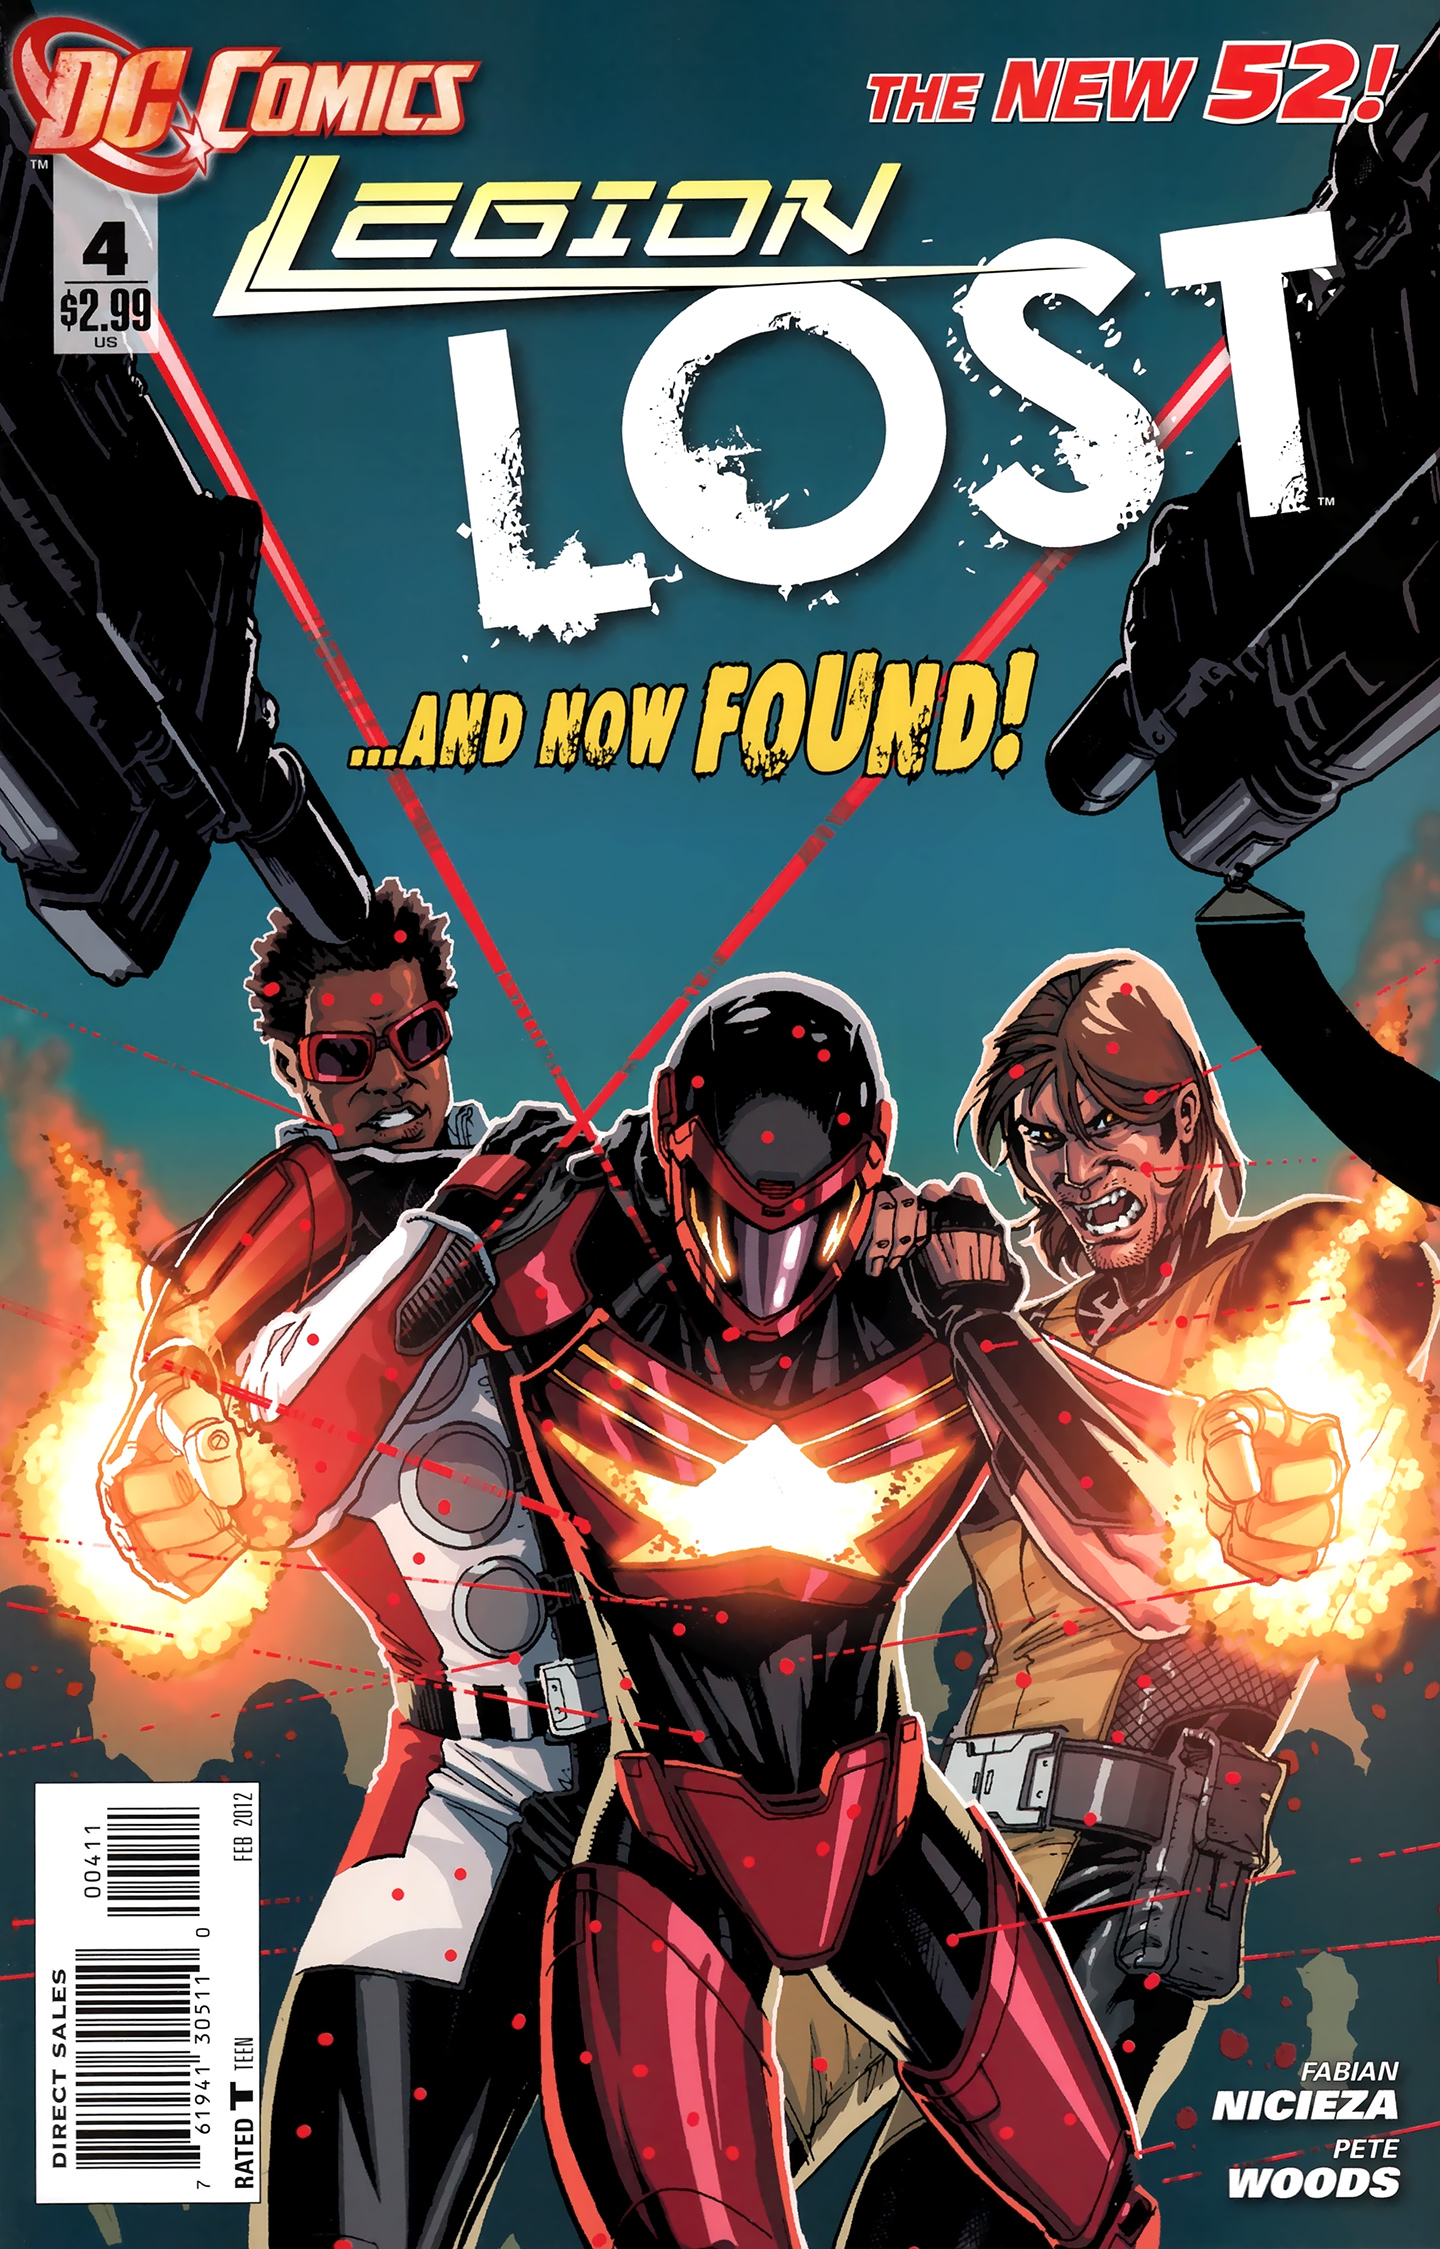 Legion Lost #3